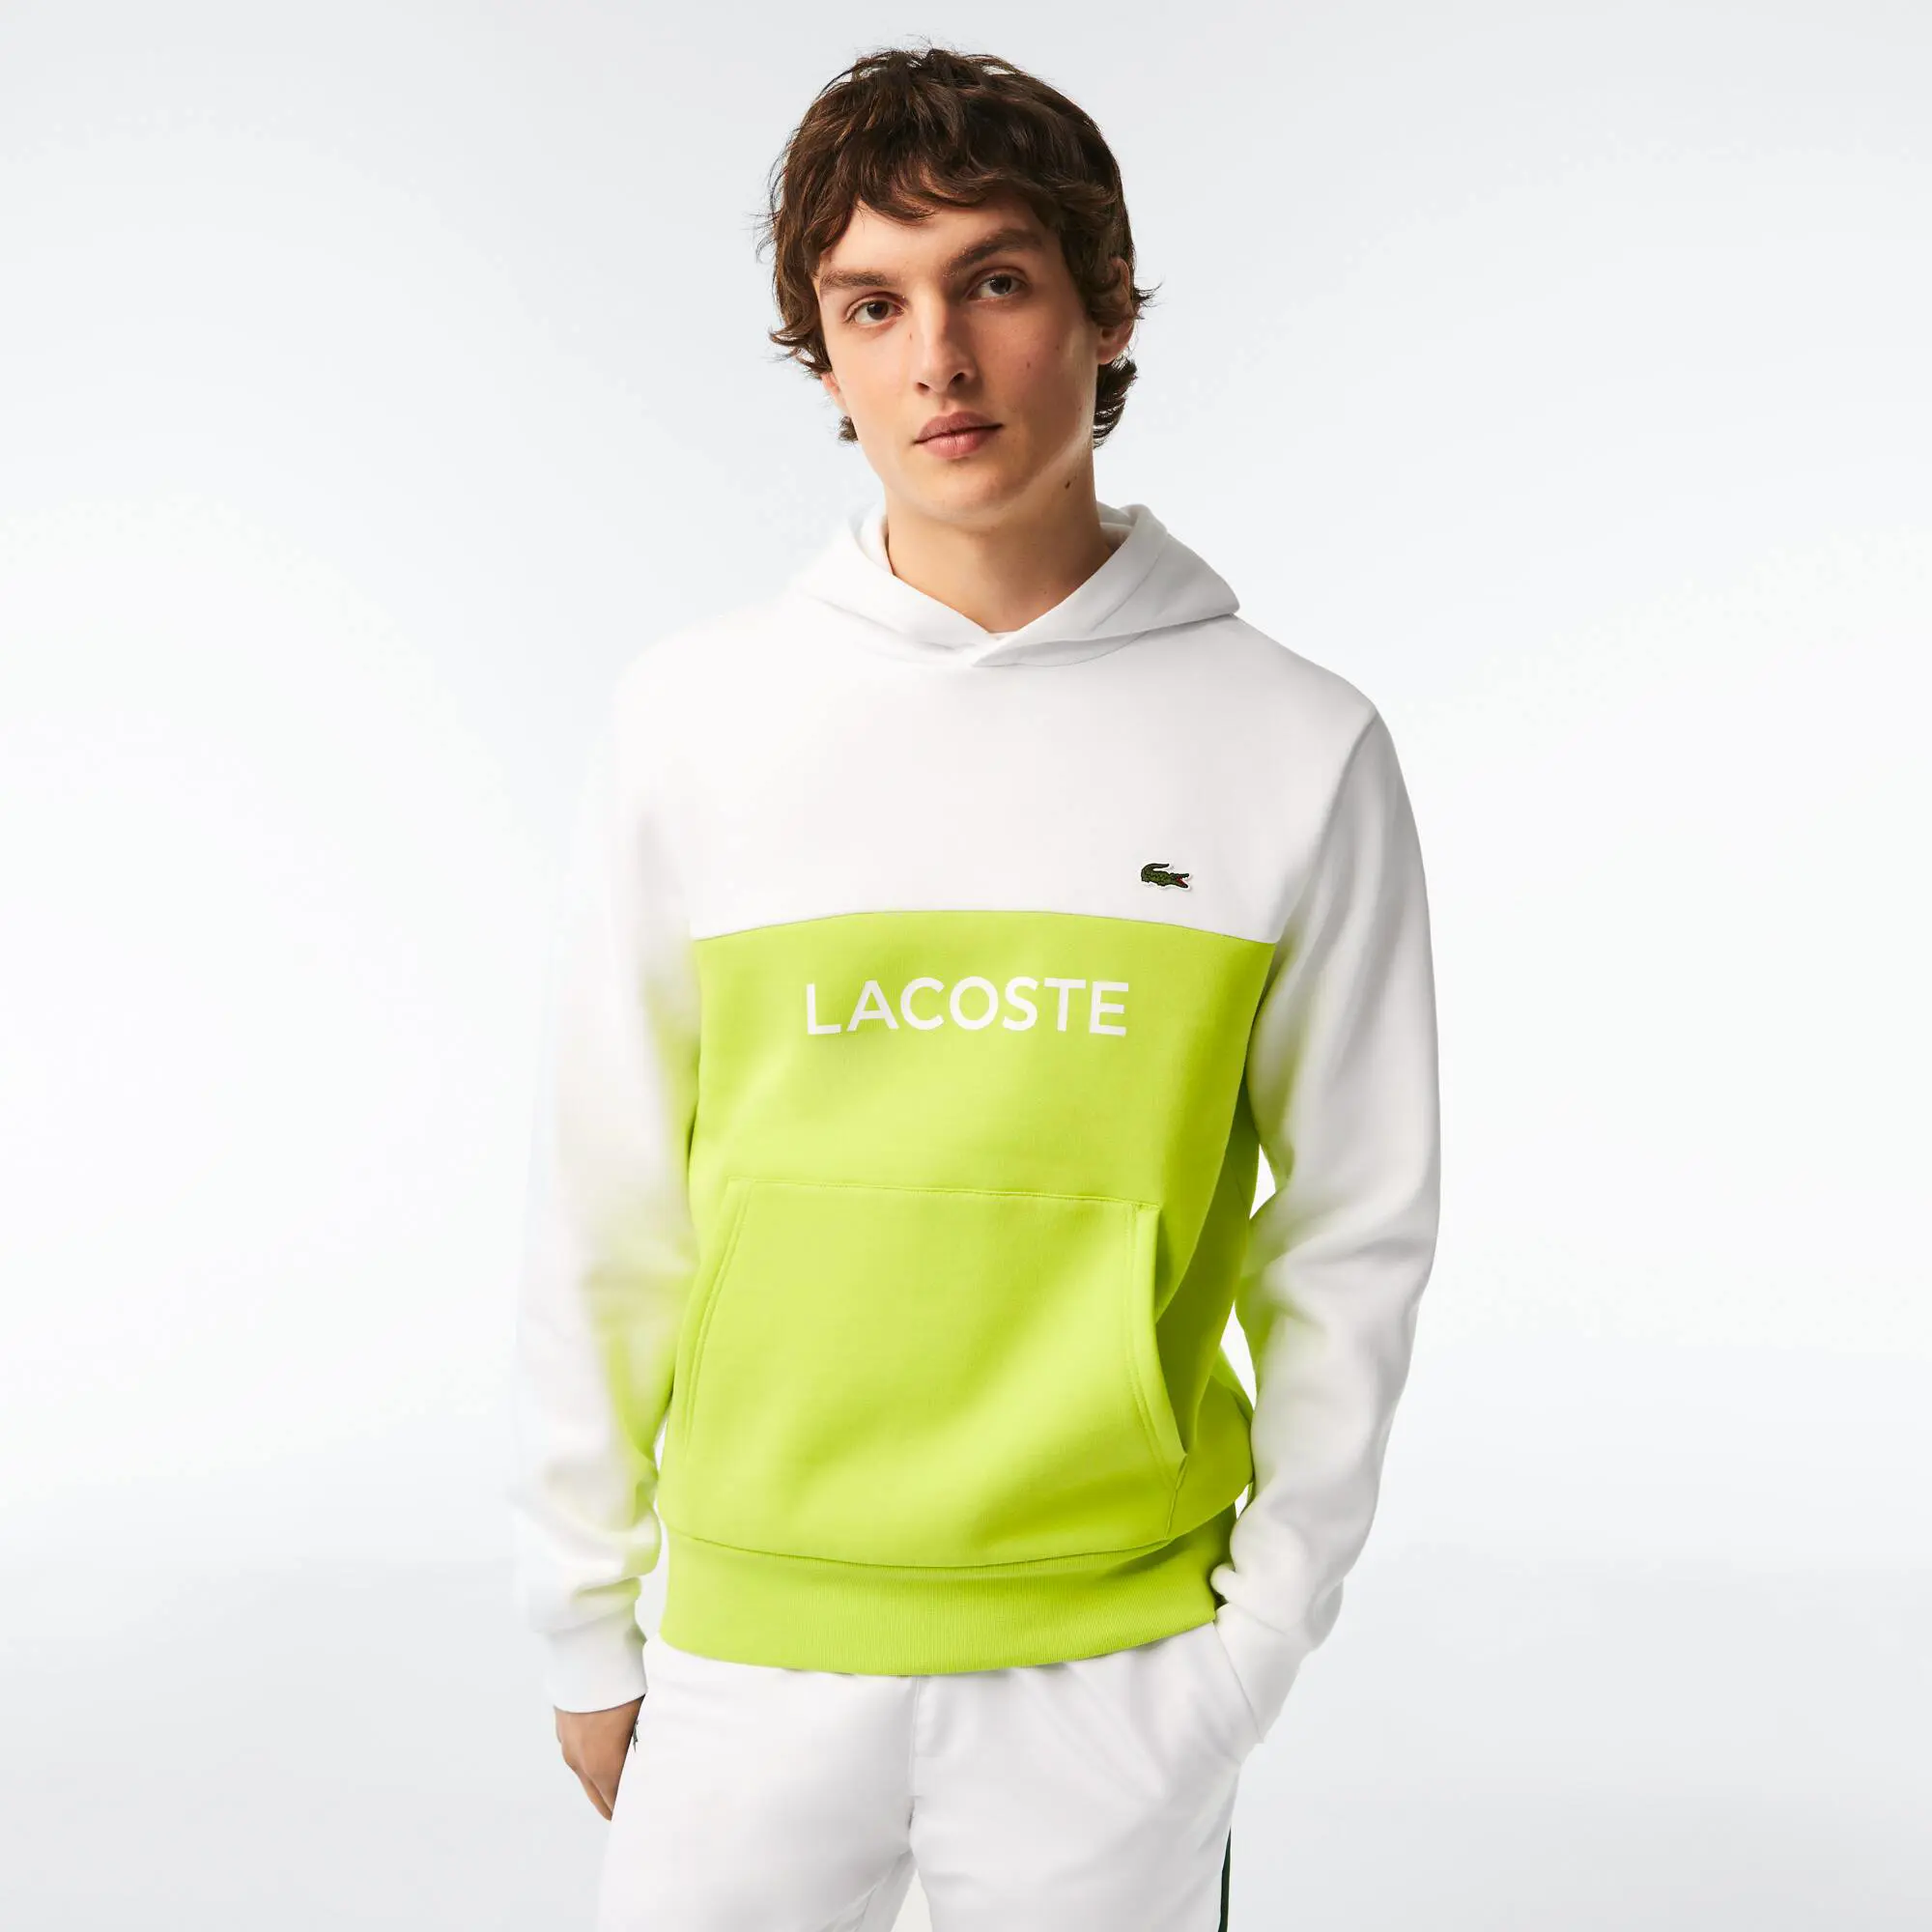 Lacoste Men’s Classic Fit Branded Colourblock Hoodie. 1